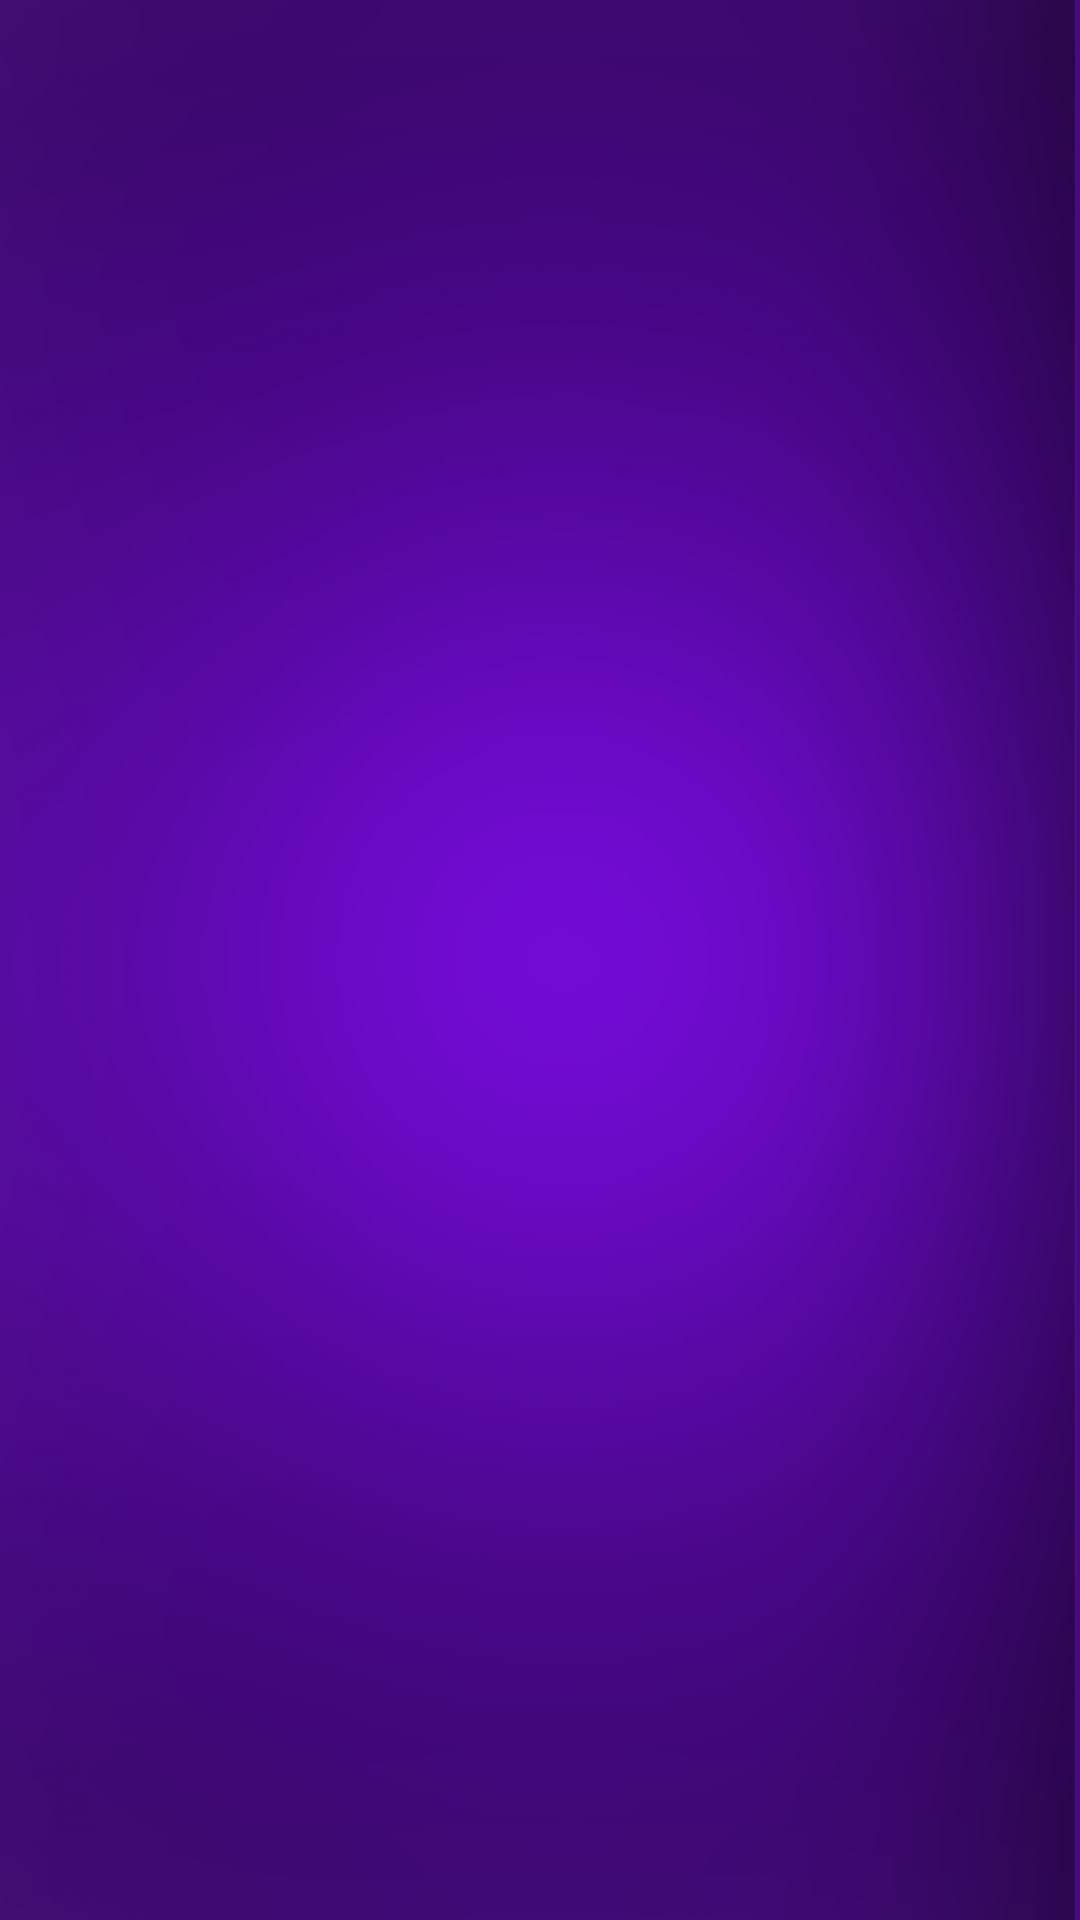 Minimalist Violet Color Iphone Wallpaper